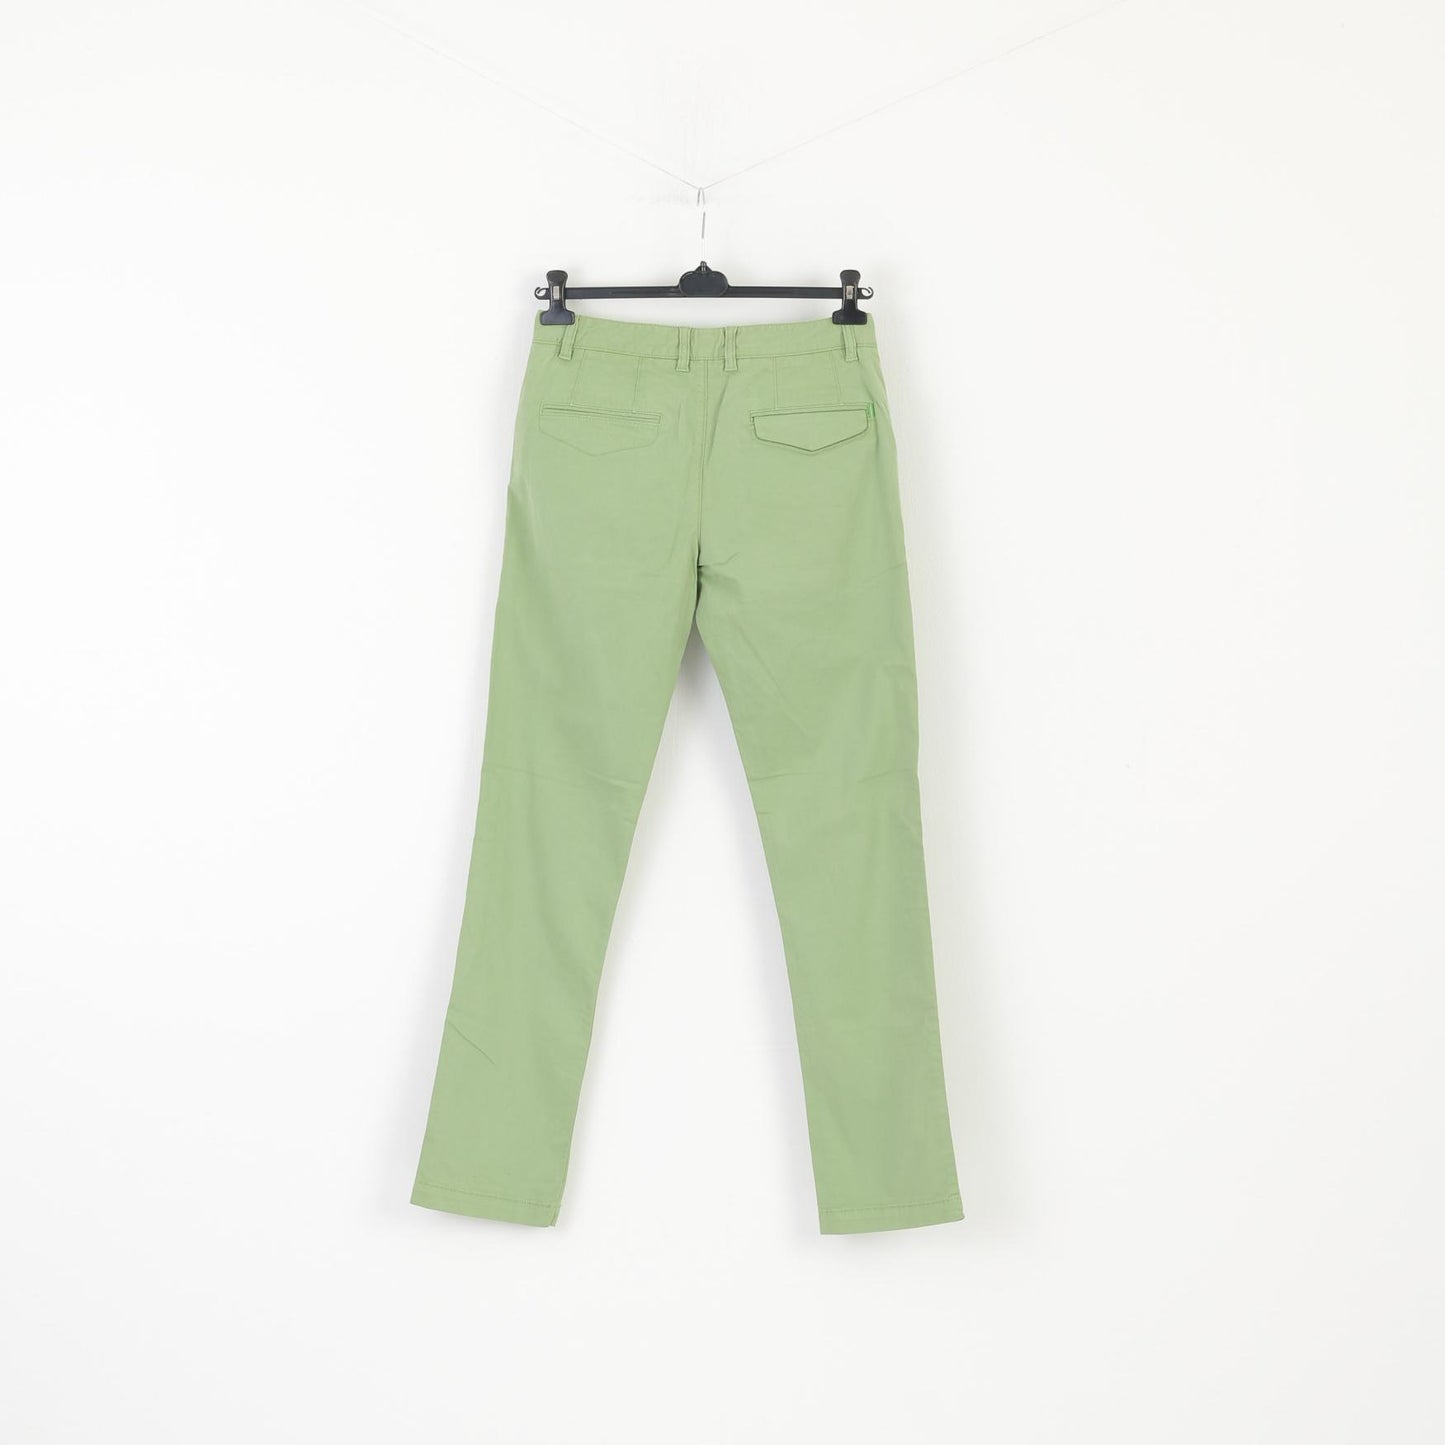 Hugo Boss Men 30 46 Trousers Green Cotton Lakany-D Slim Fit Casual Pants